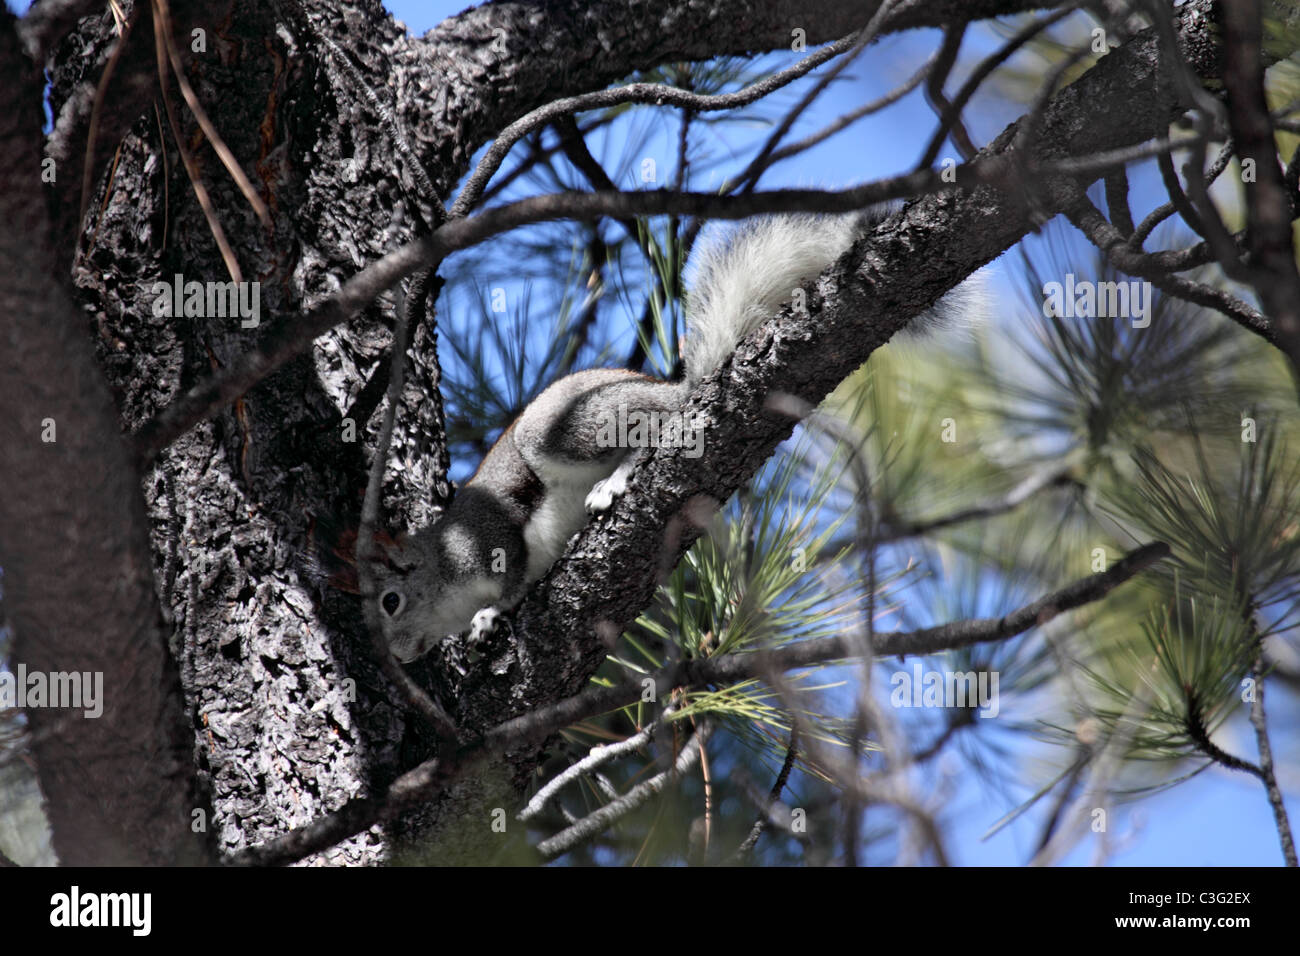 Aberts or Tassle eared squirrel Sciurus aberti in Pinion pine tree in Arizona Stock Photo